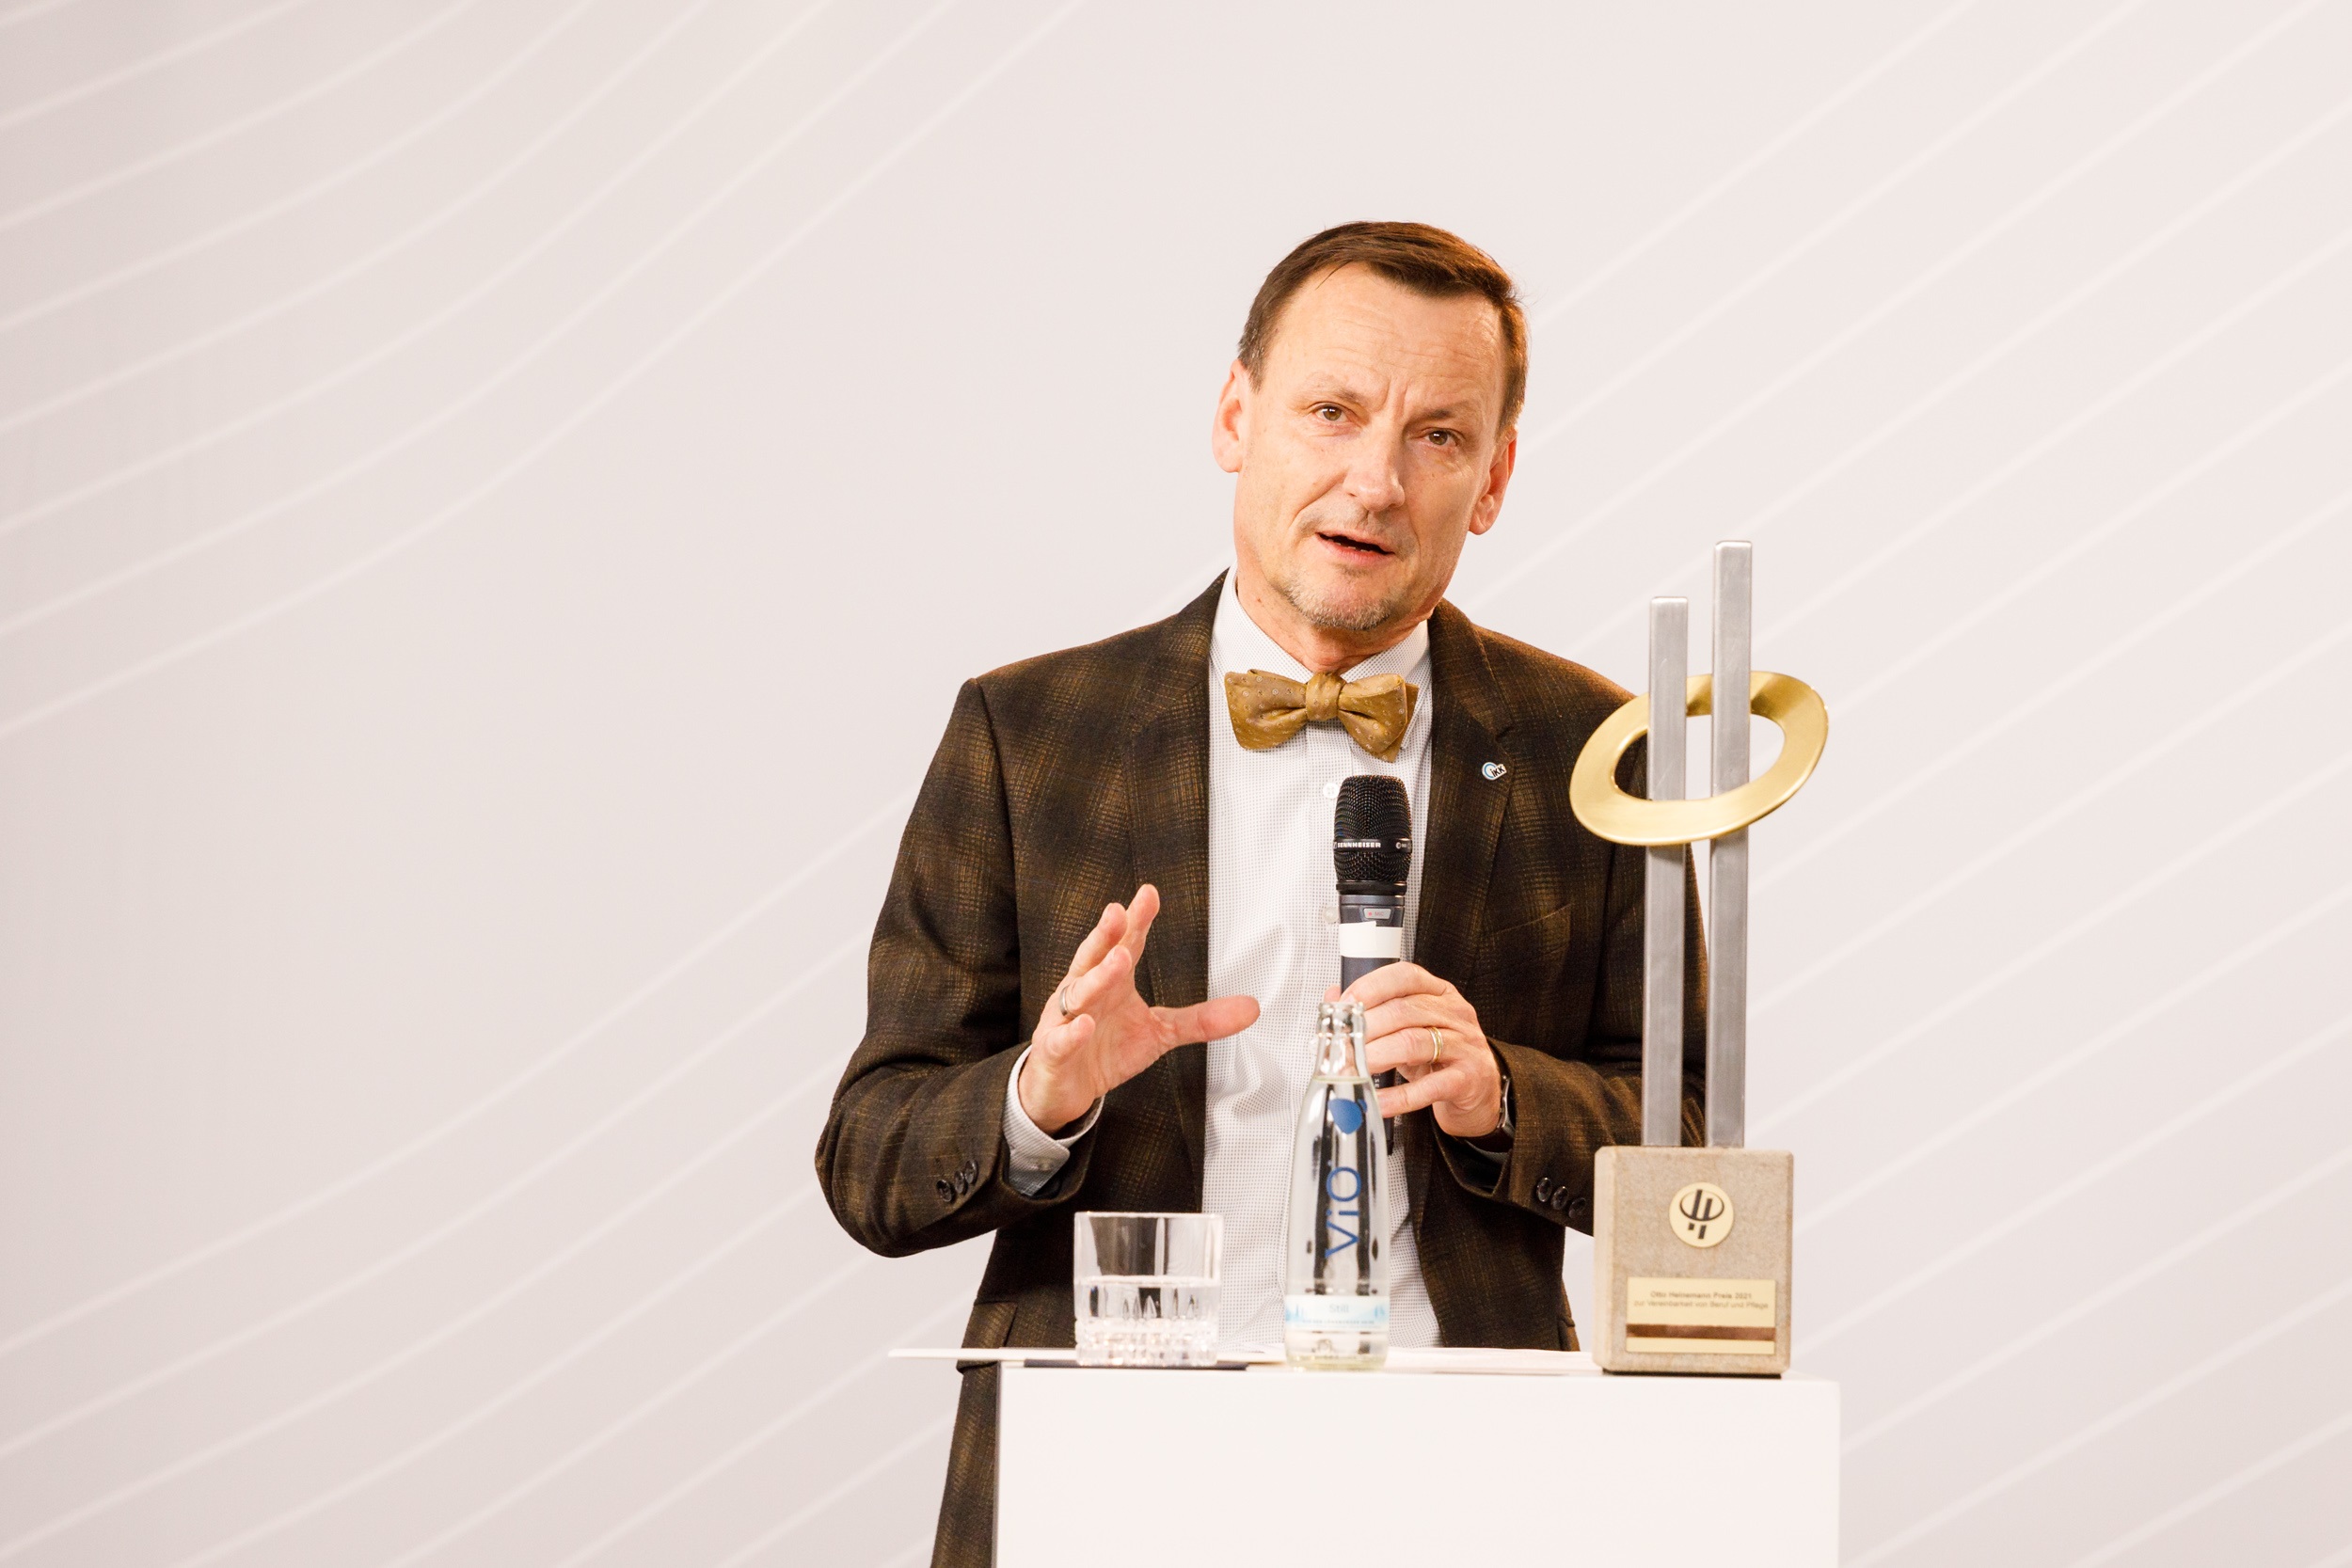 Berliner Pflegekonferenz 2021, Award Verleihung, Am 11. November 2021, Foto: Stefan Wieland